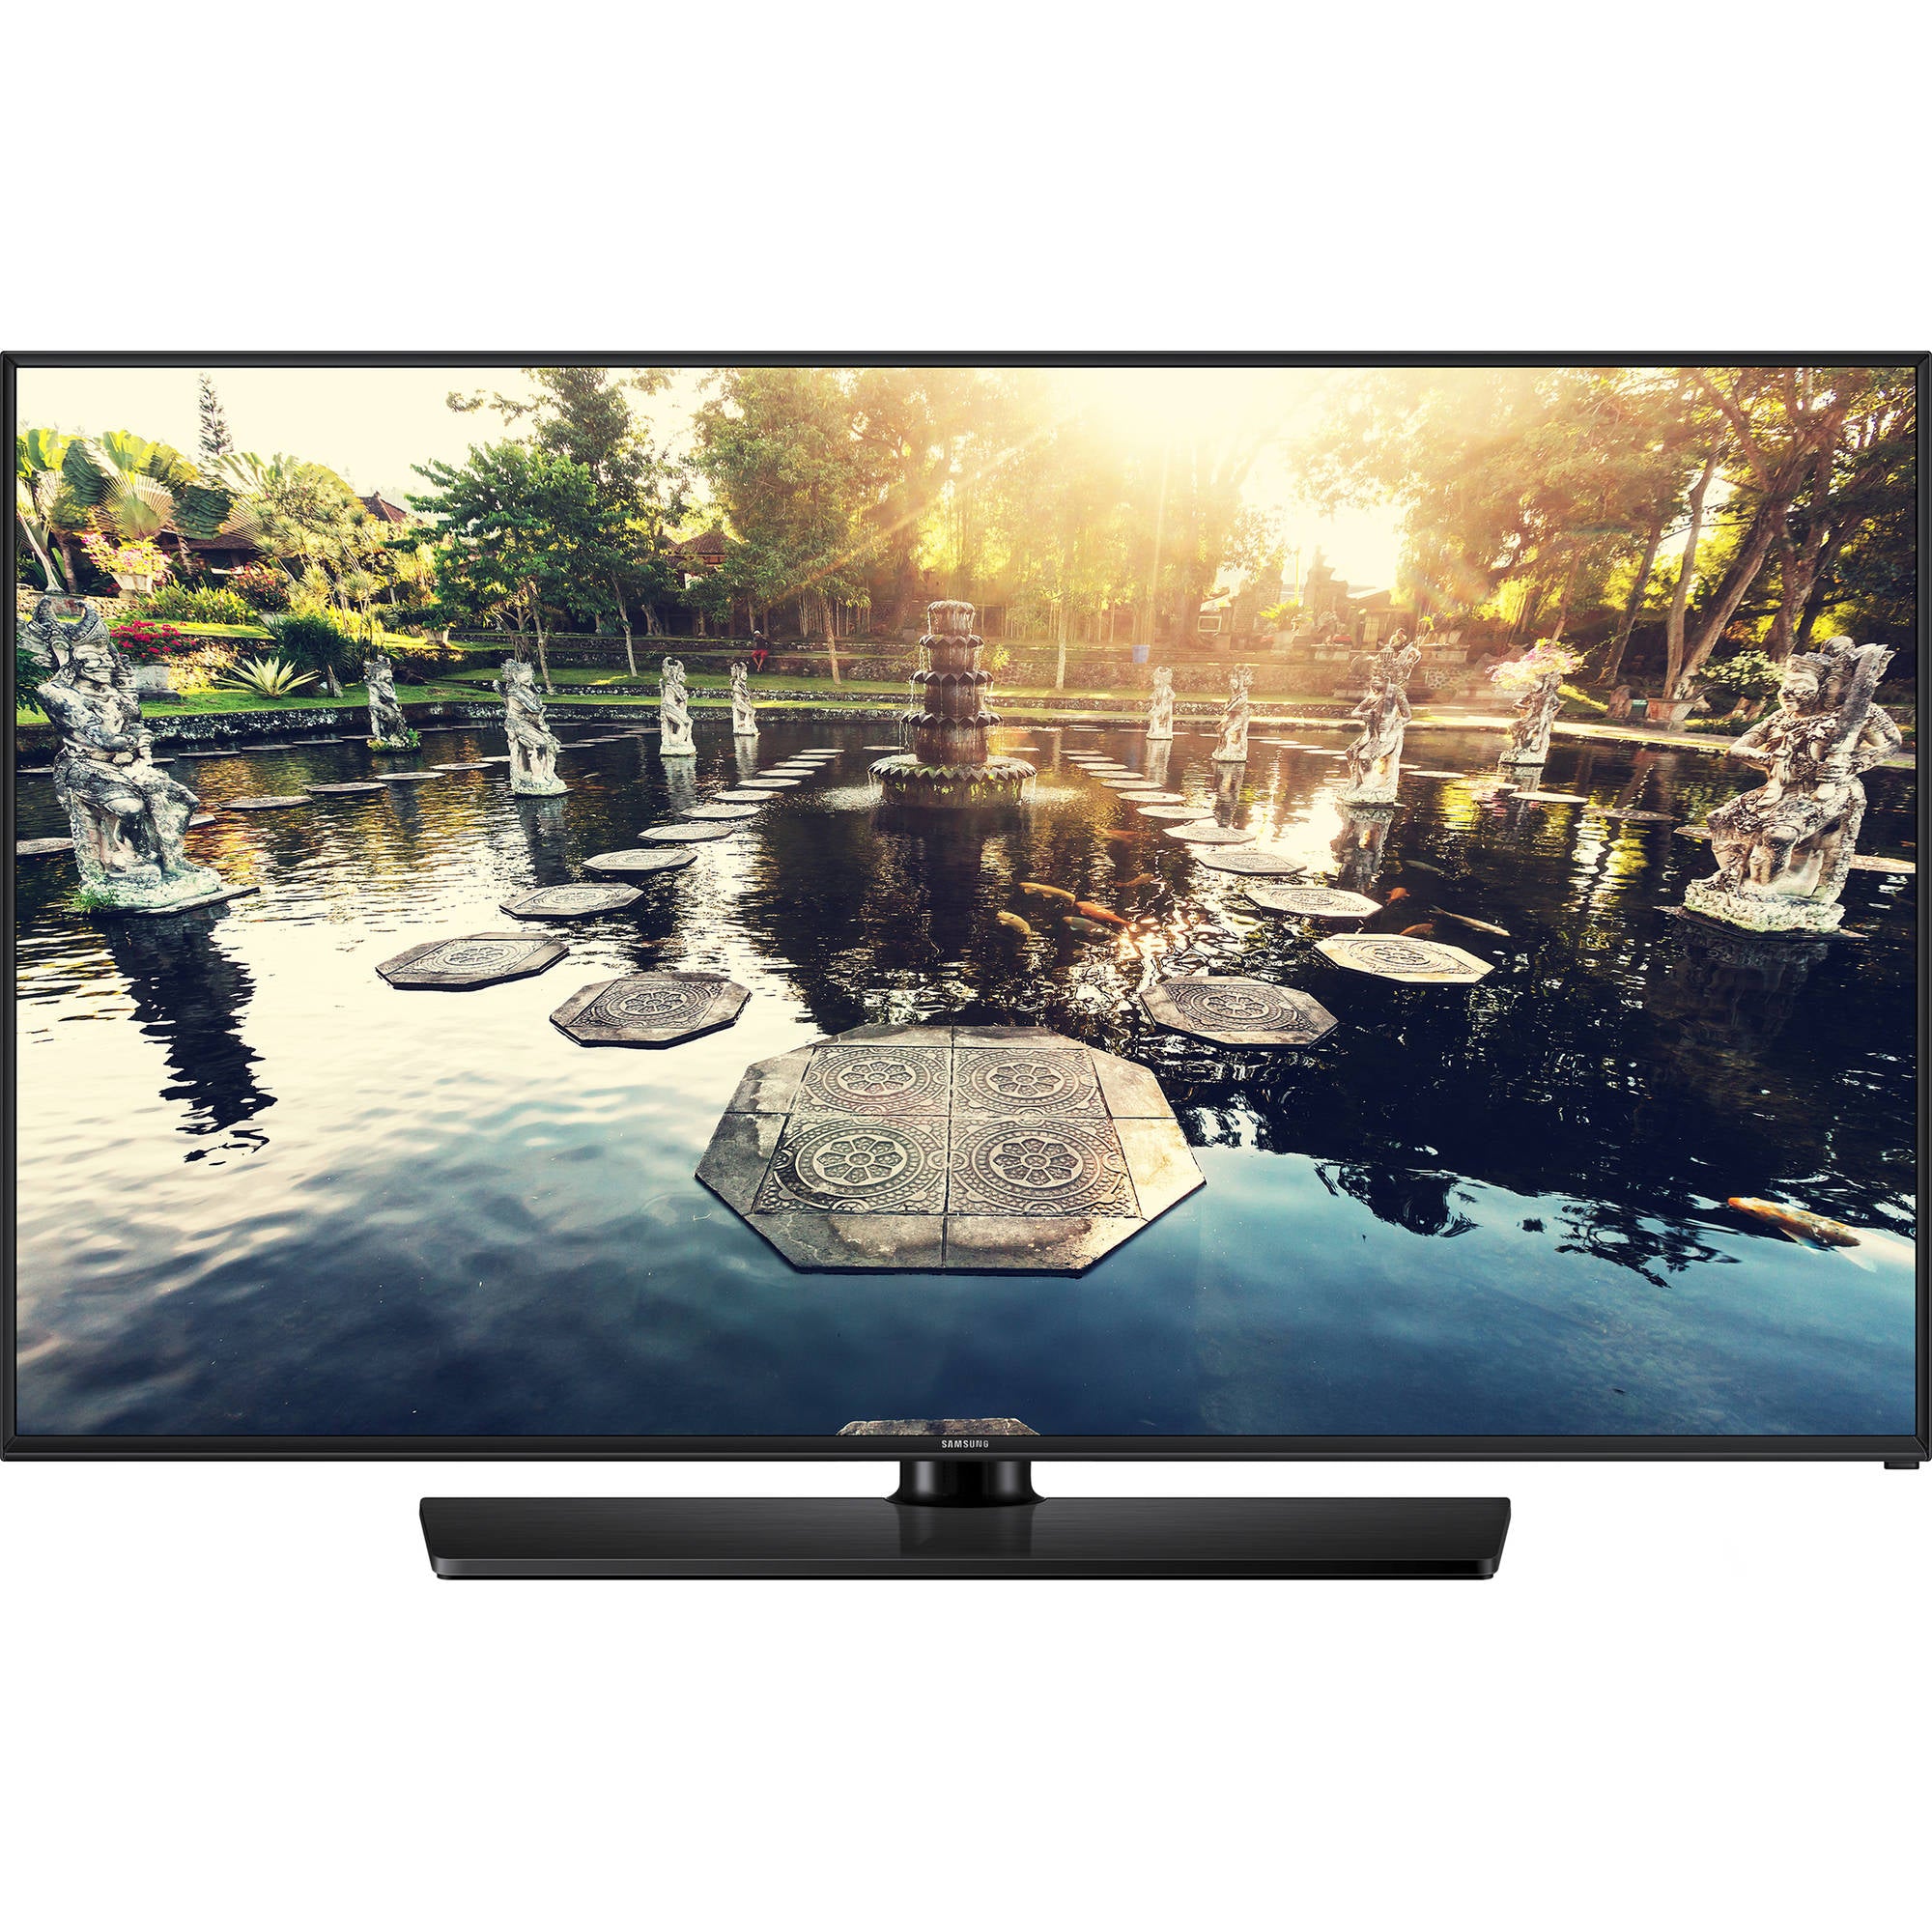 Samsung HG50NE690BFXZA 50" Full HD Slim Direct-Lit LED Hospitality Smart TV with Built-in Wi-Fi (Black) - Samsung Parts USA